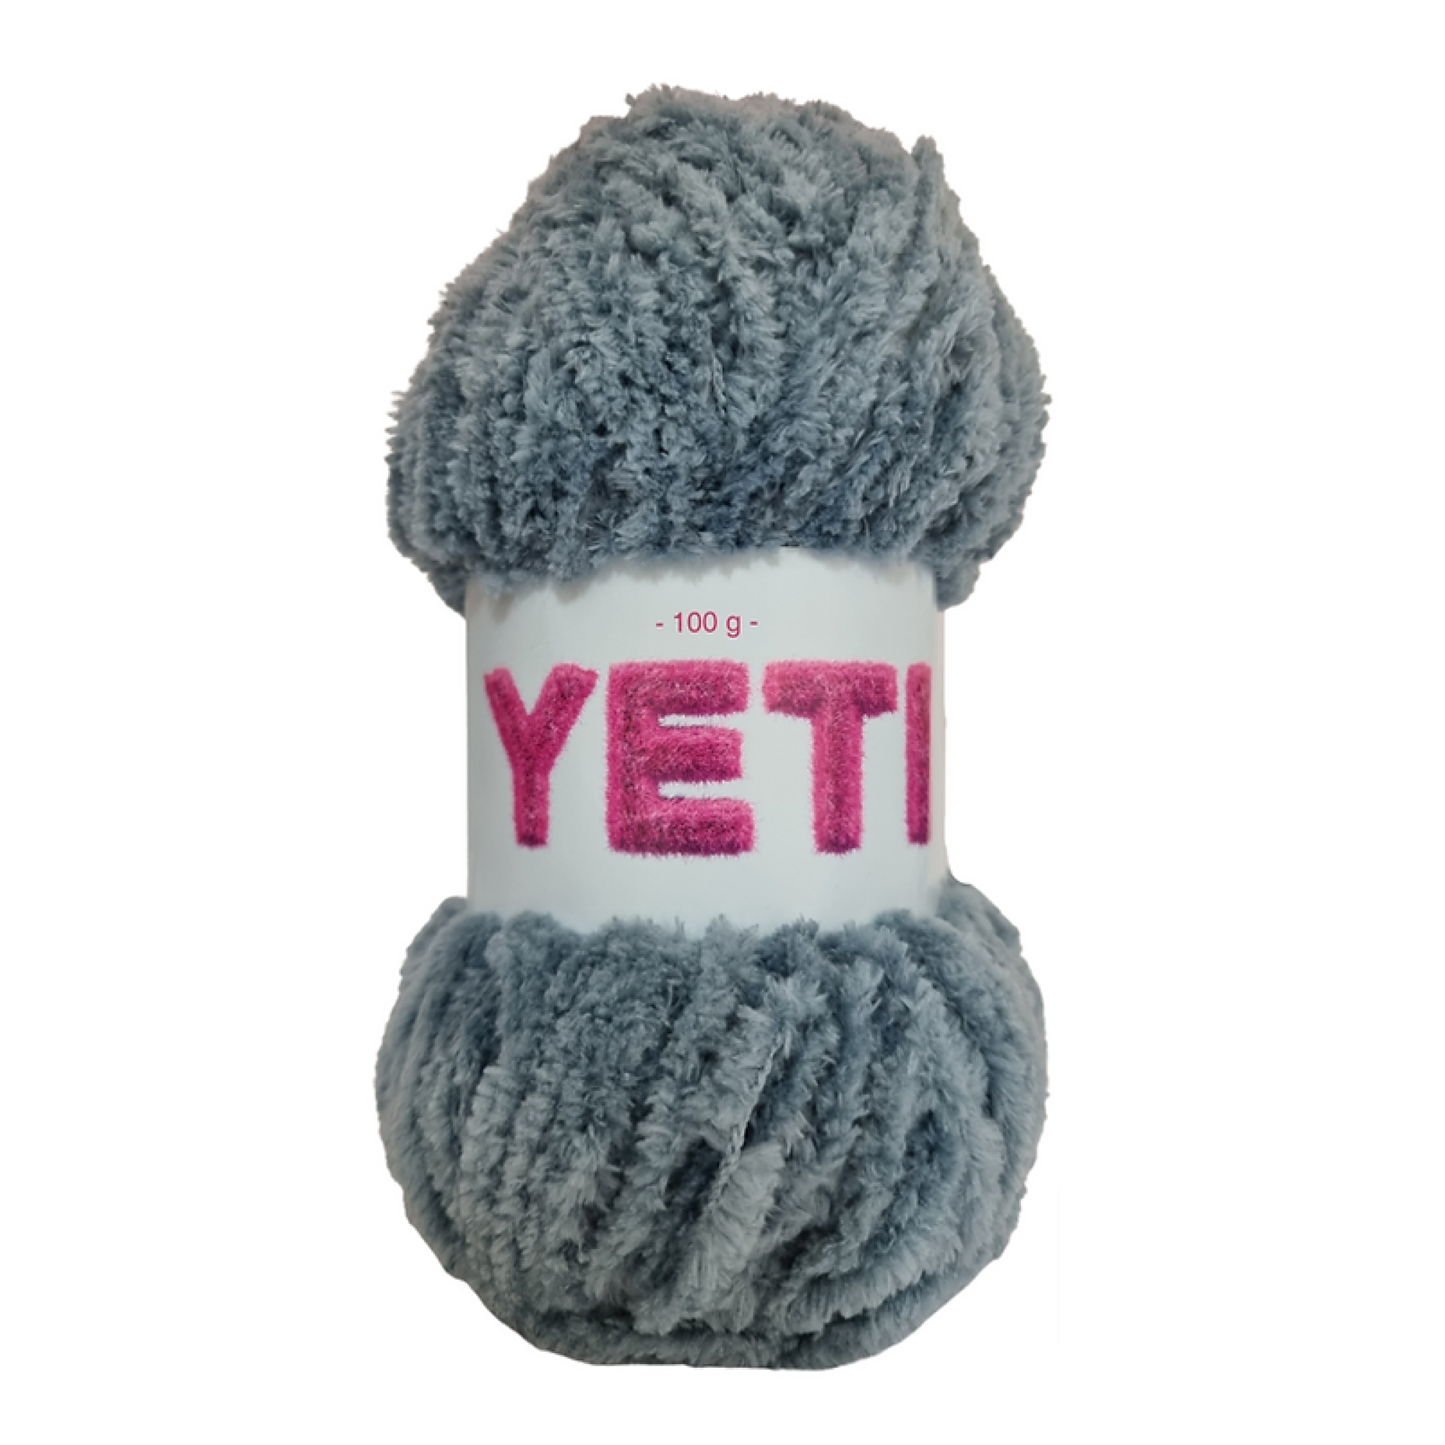 Cygnet Yarns - Yeti - Chunky - 100g Ball - 2087 Rockies